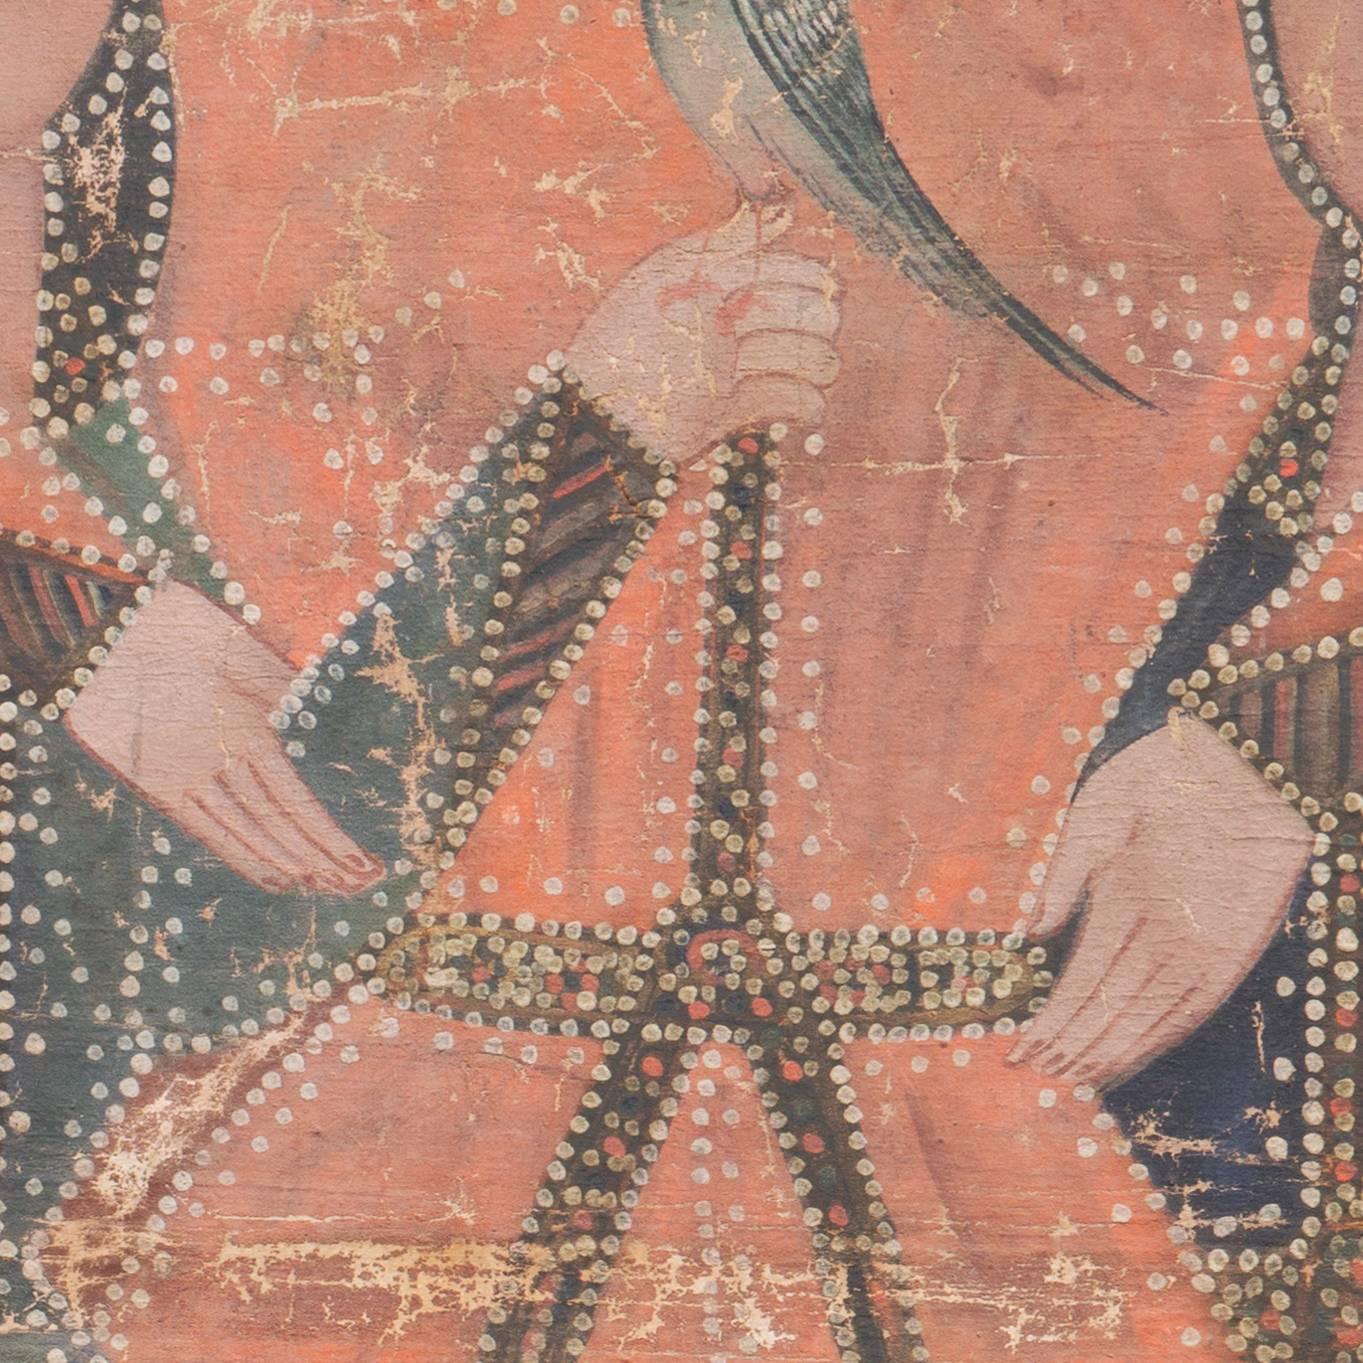 'Sisters with a Songbird', 18th century Qajar Dynasty Persian Princesses, Zaman 1